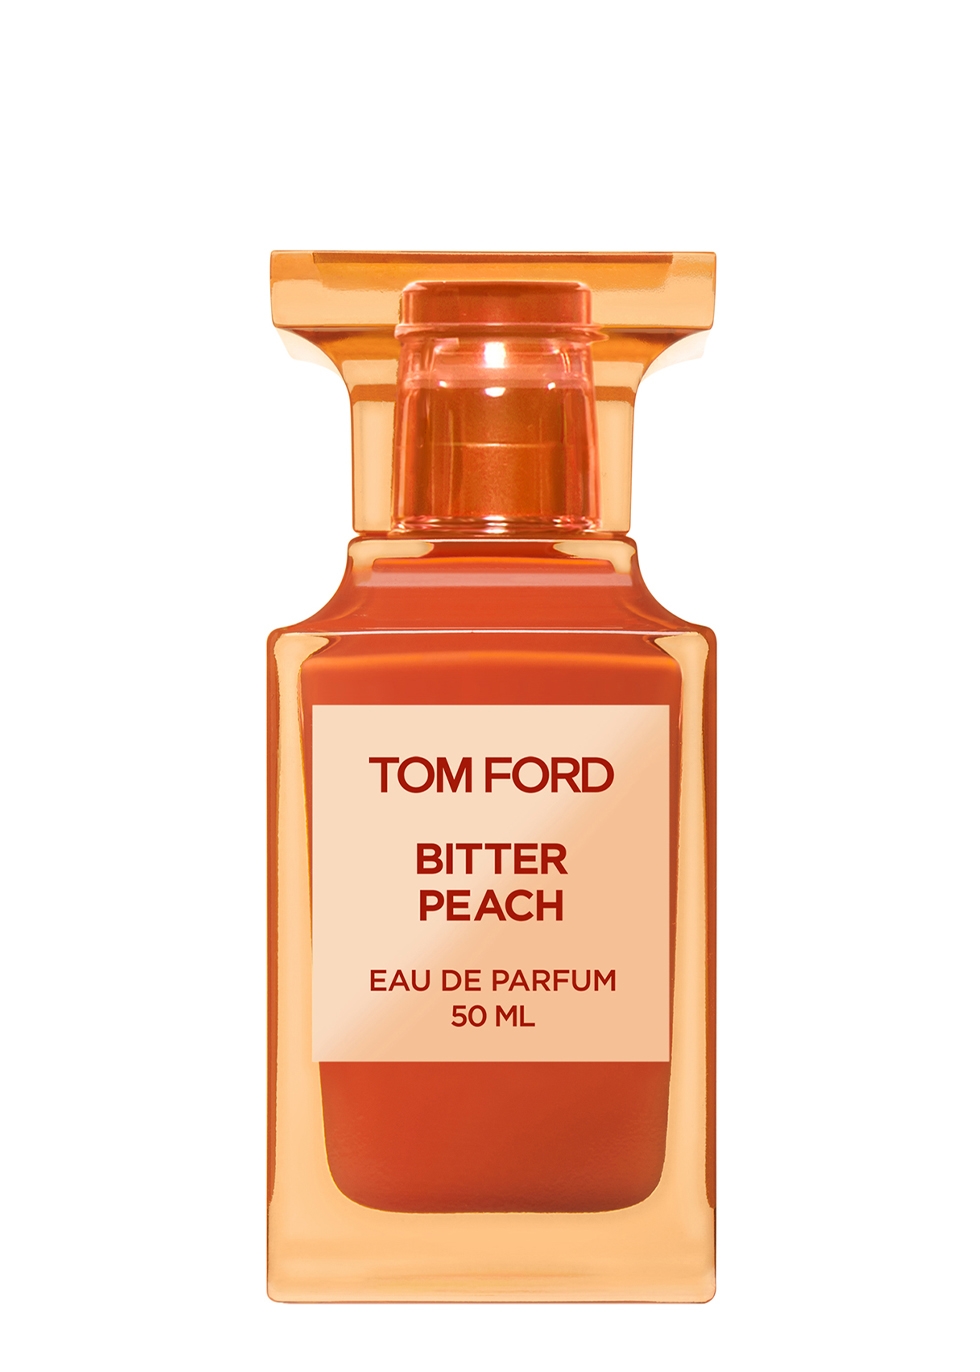 Tom Ford Bitter Peach 50ml - Harvey Nichols